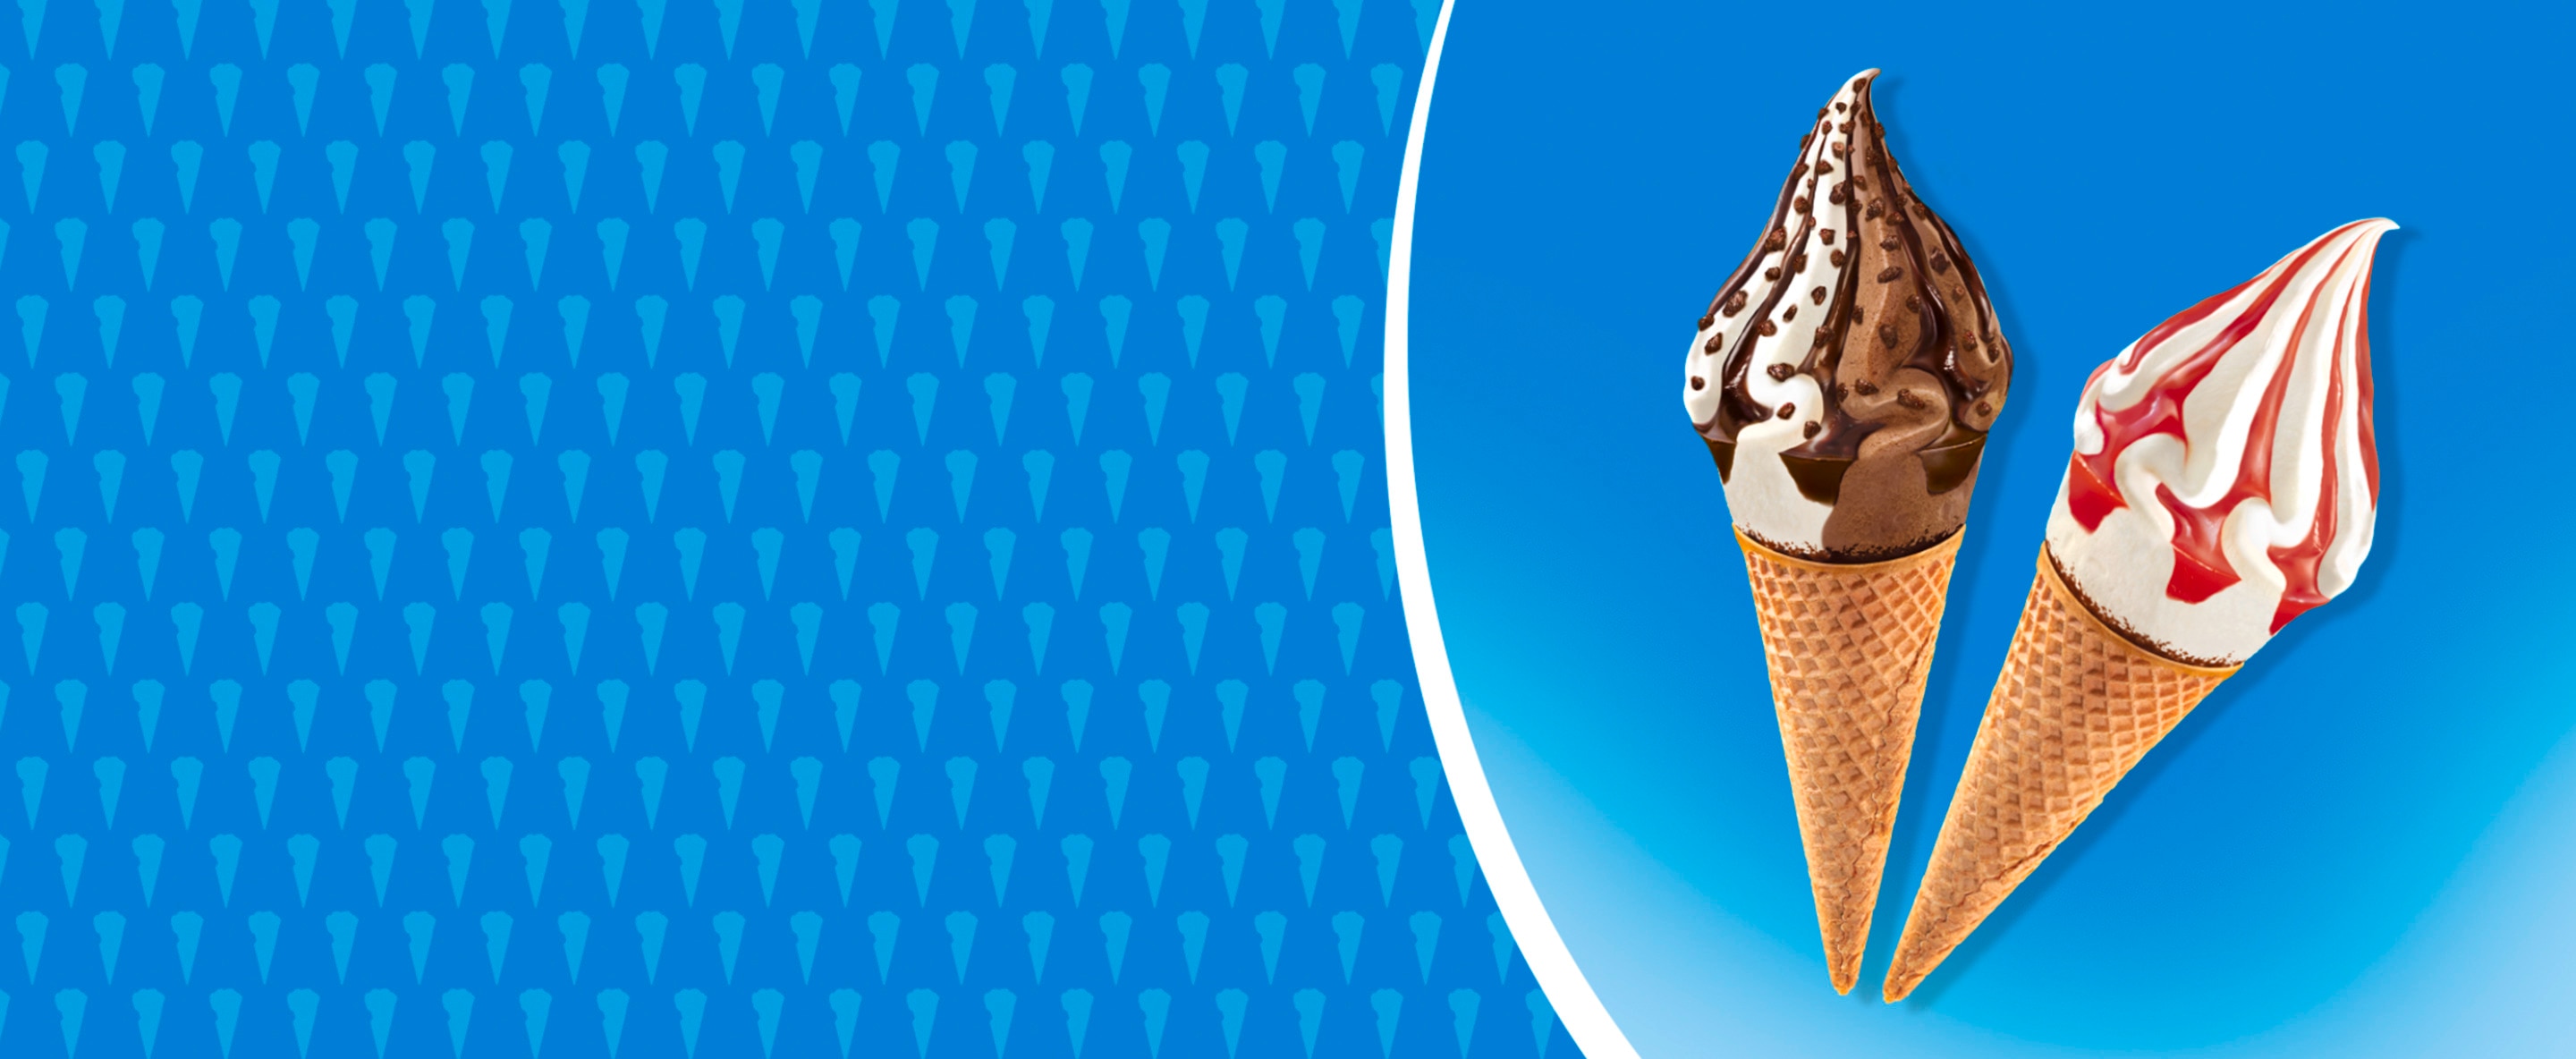 Cornetto Soft Ice Cream on blue background